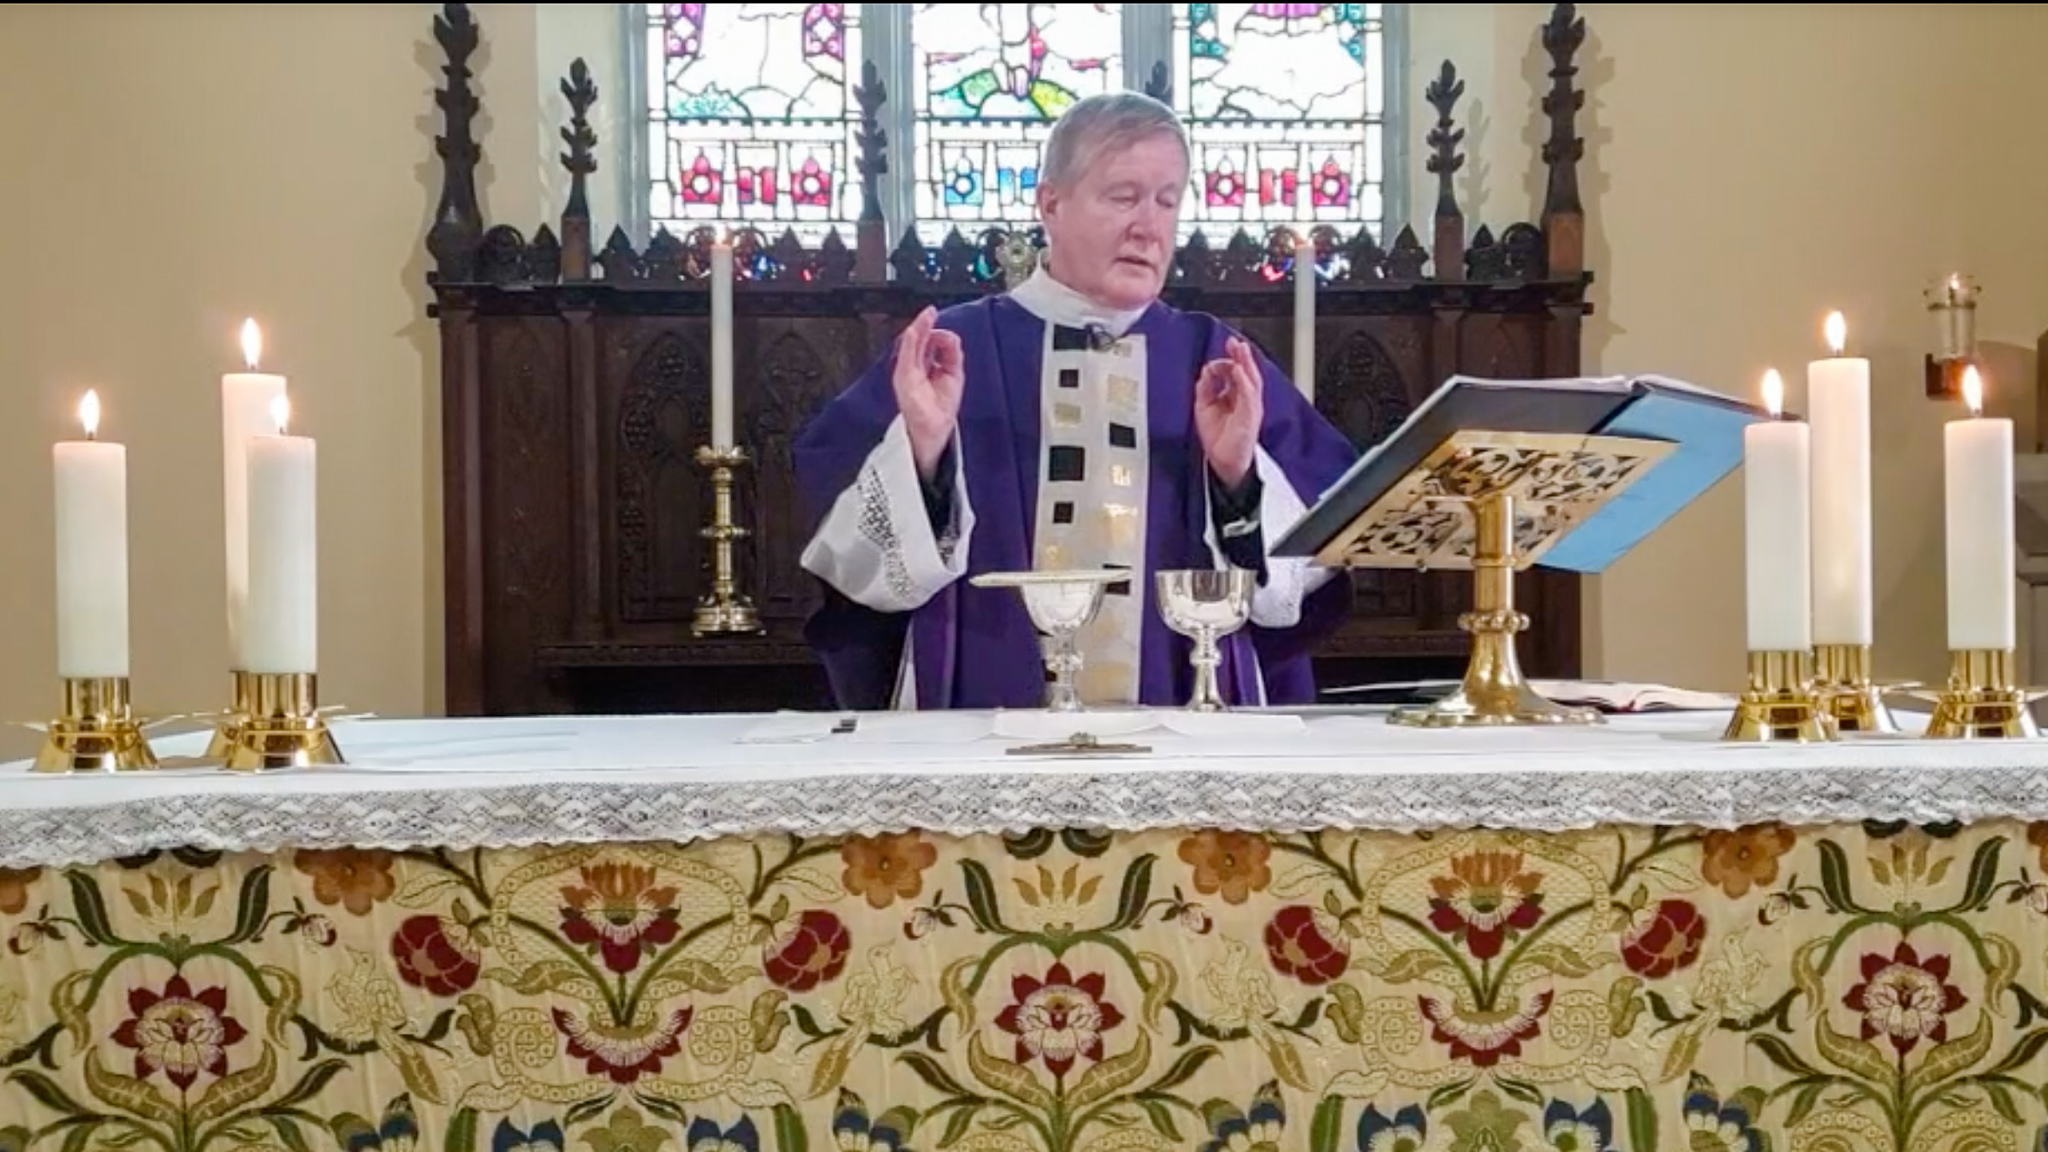 Parish Eucharist on Sunday 13th March 2022.